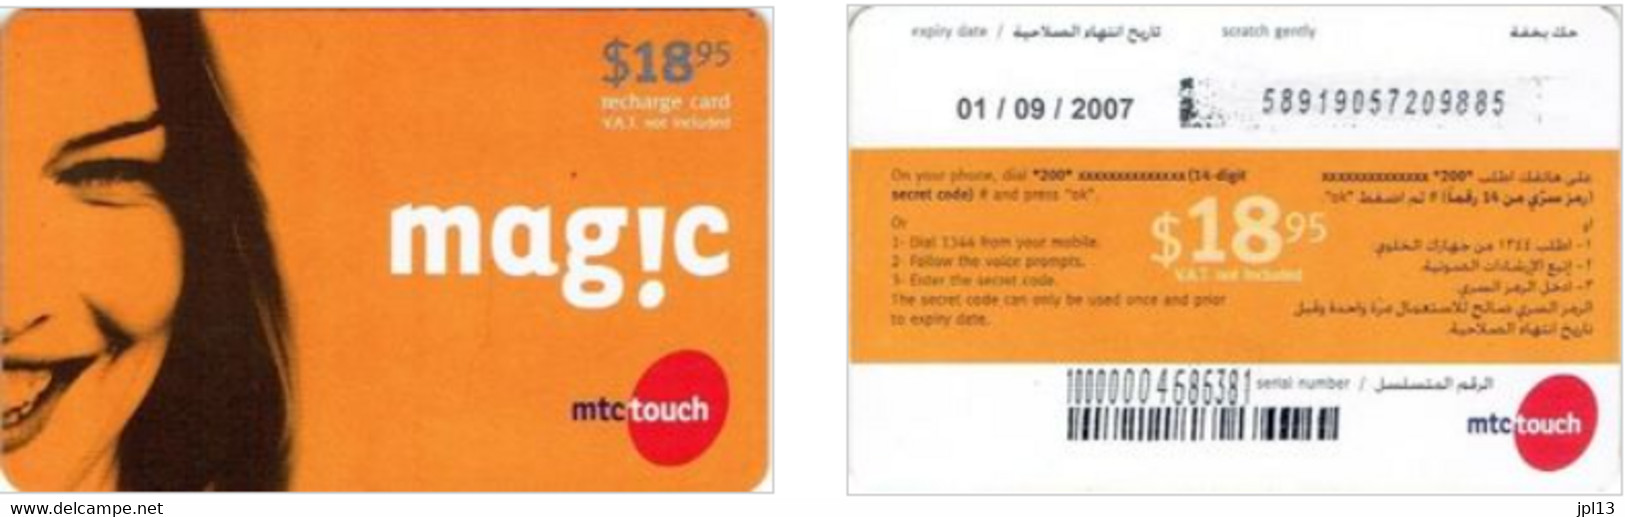 Recharge GSM - Liban - MTC Touch - Magic - Woman $18,95, Exp. 13/05/2007 - Lebanon